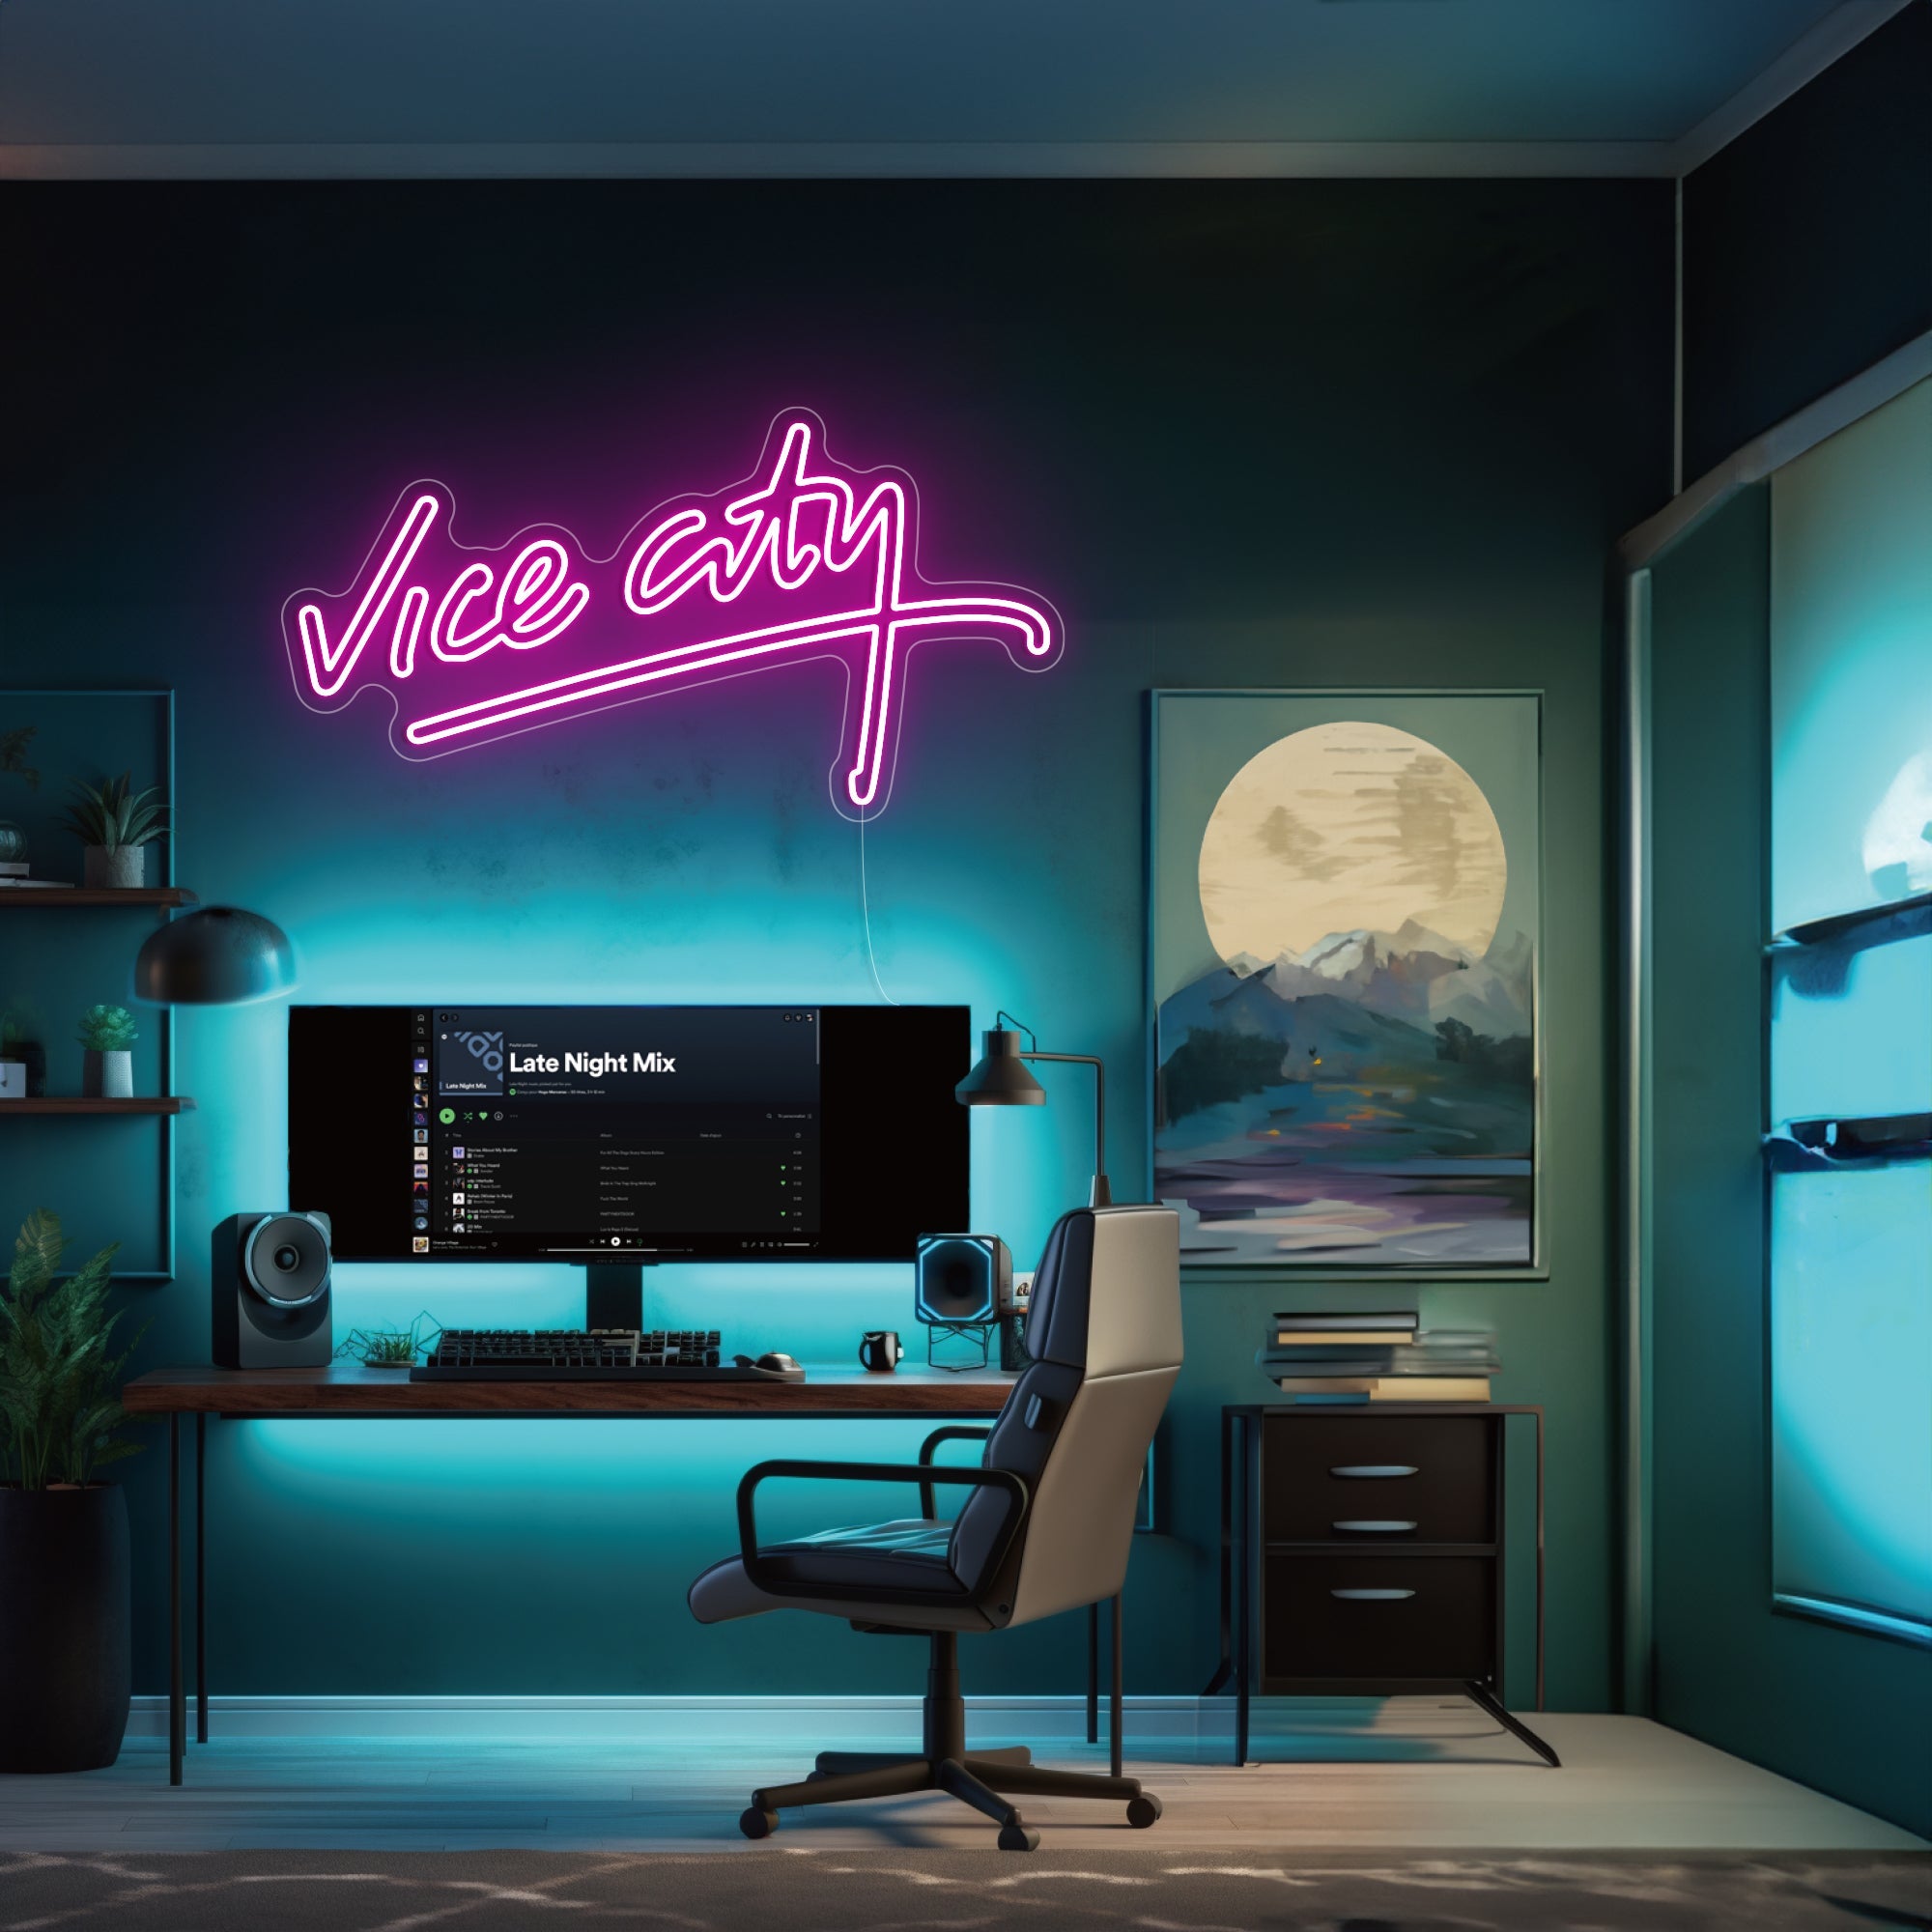 Vice City - Néon LED - PimpMyNeon